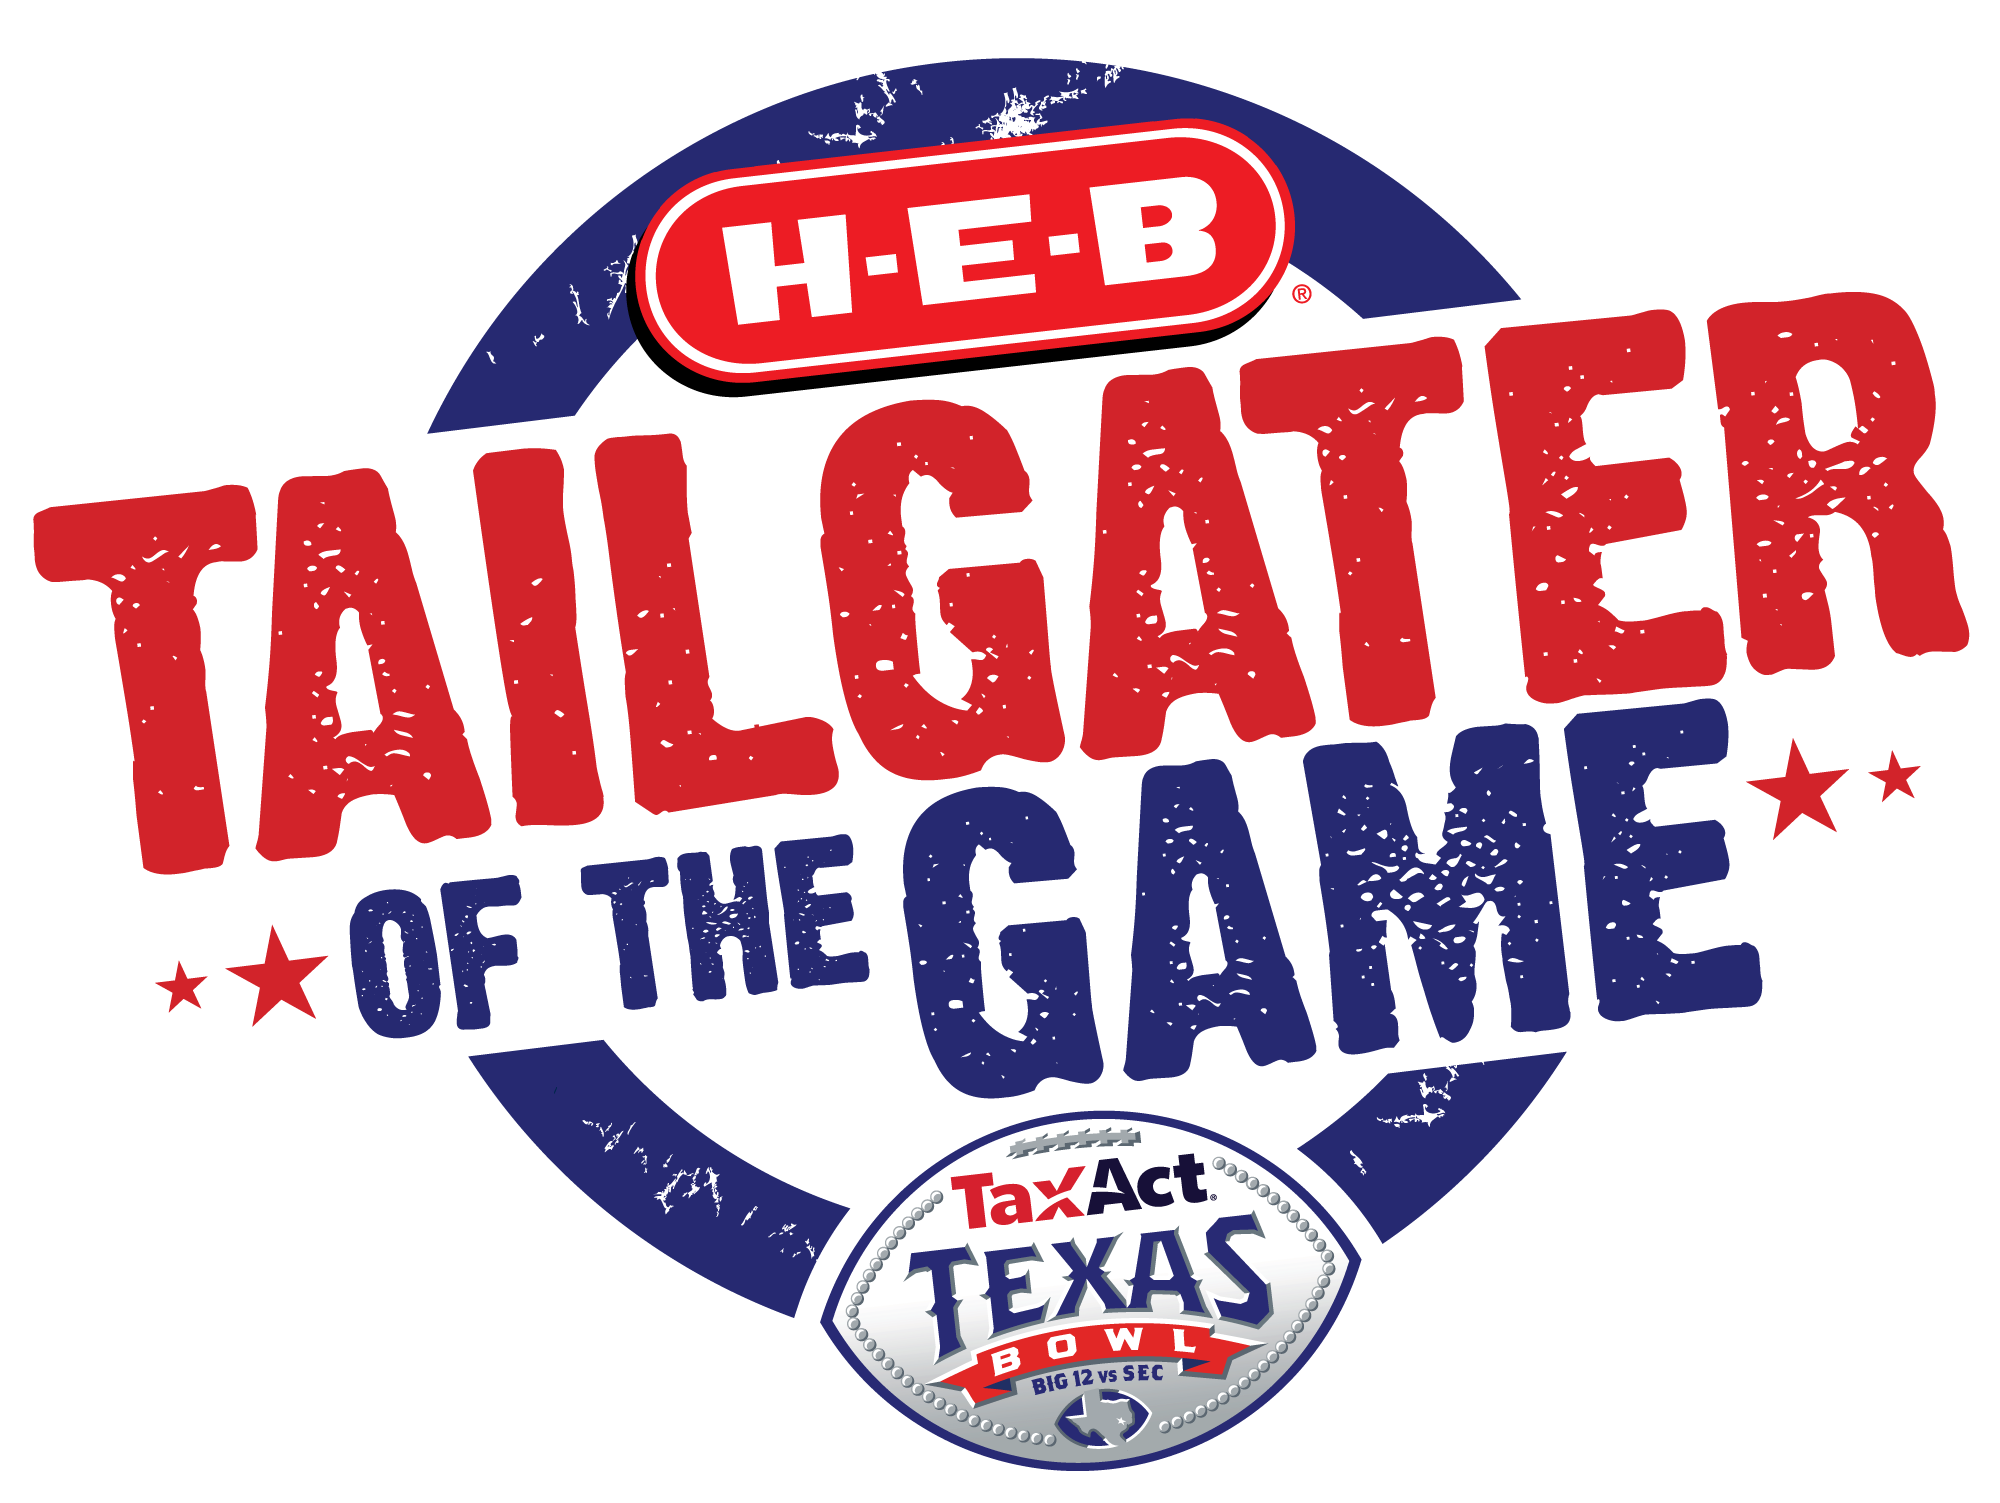 H-E-B Official Tailgate Headquarters logo